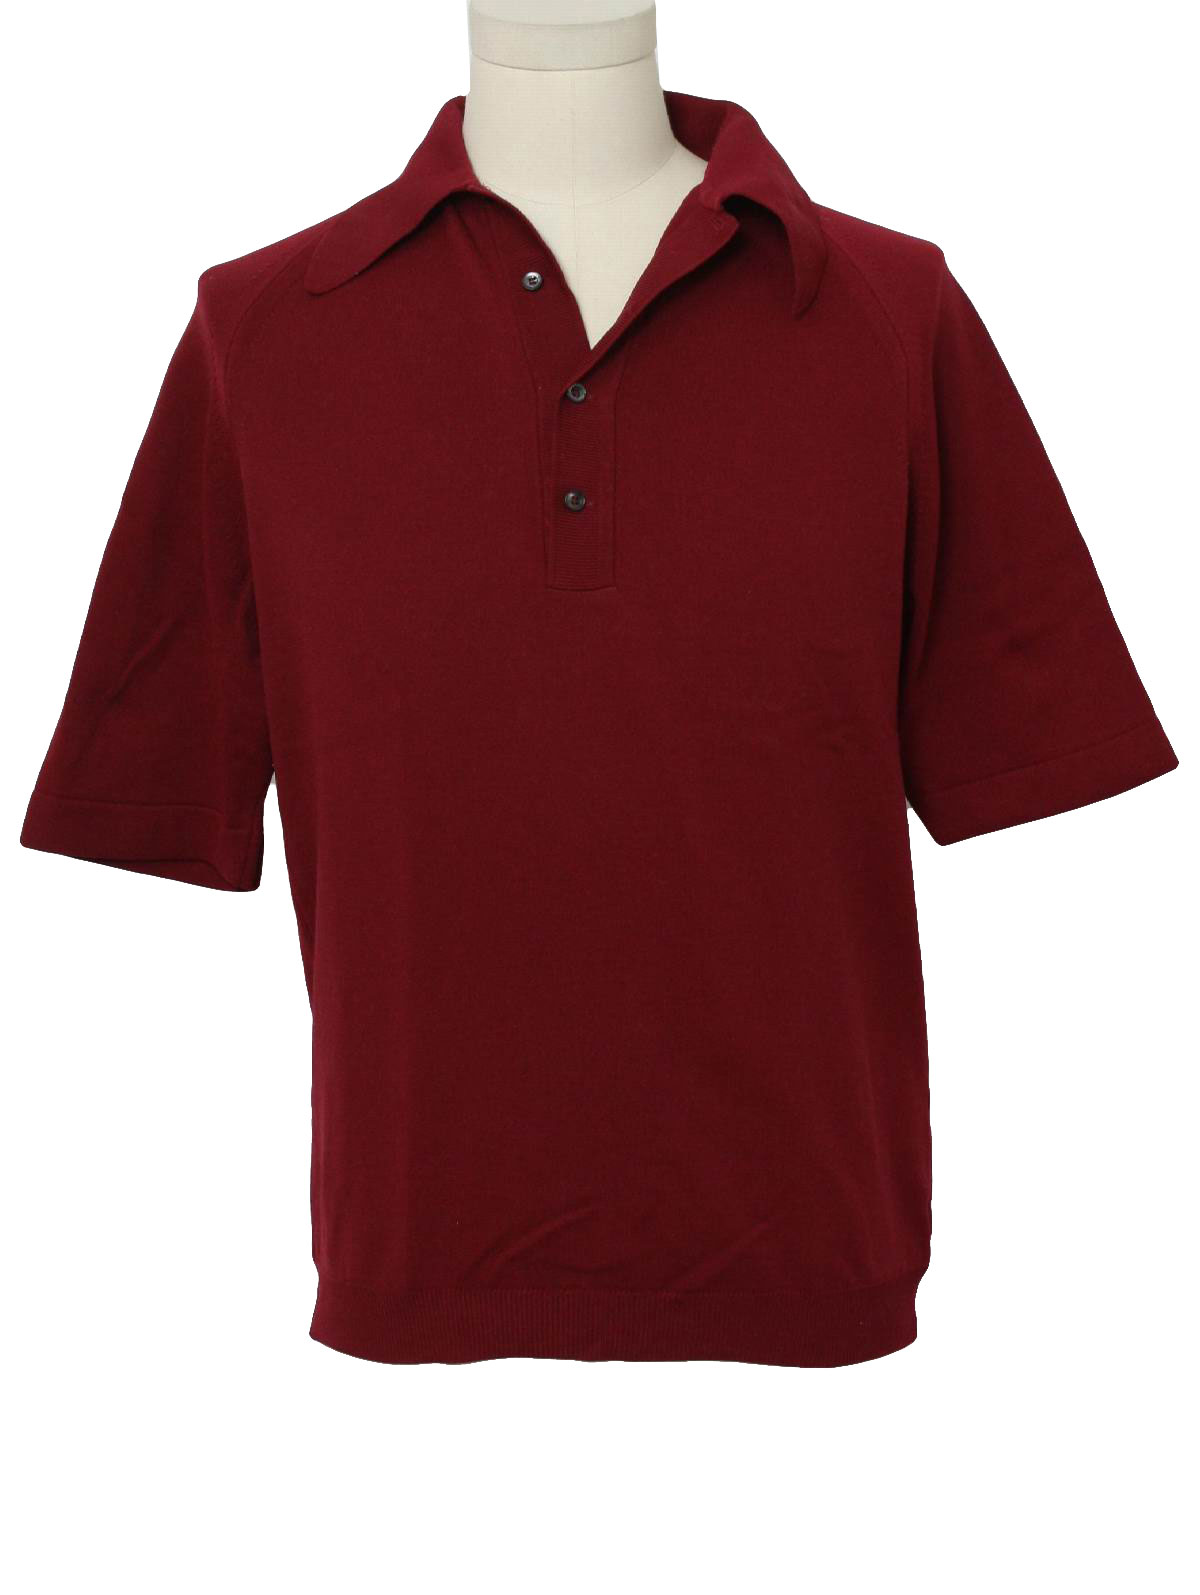 Retro 1970's Knit Shirt (Puritan) : 70s -Puritan- Mens burgundy nylon ...